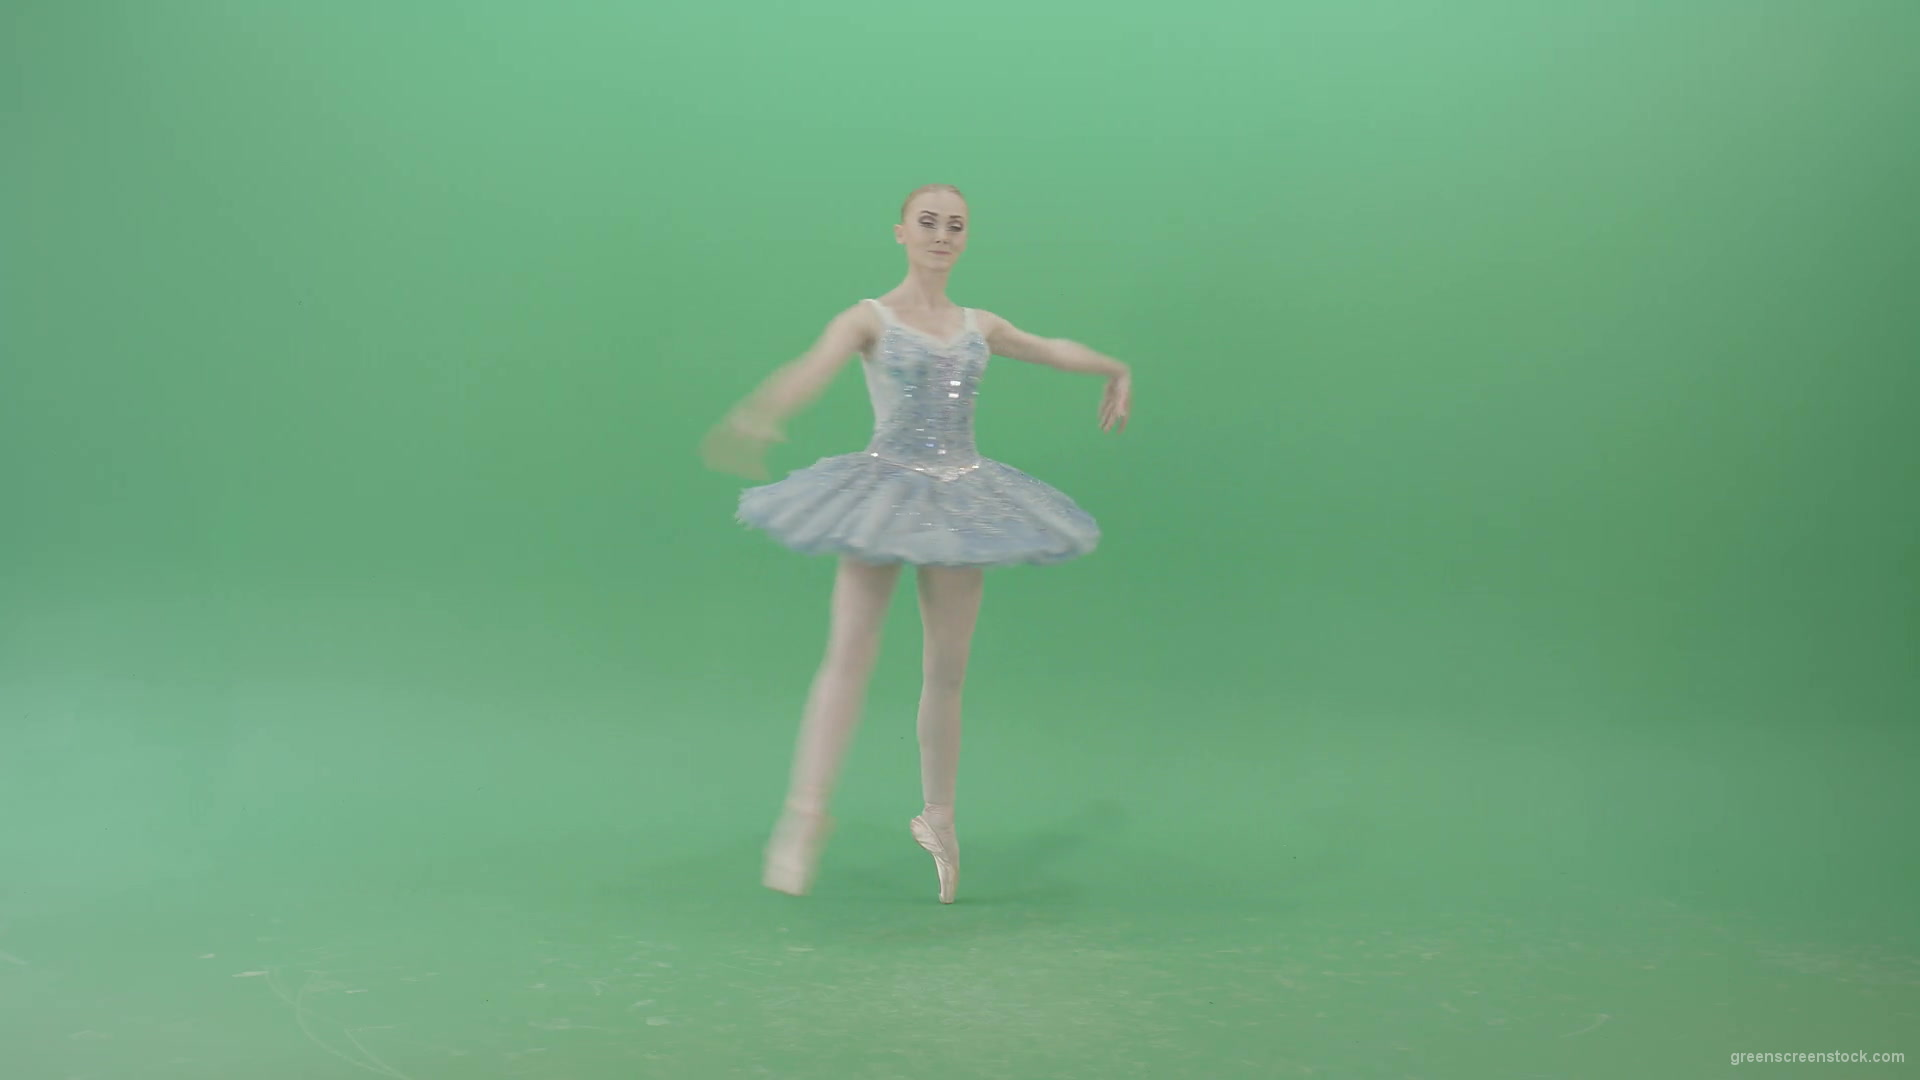 Happy-Ballerina-Ballet-Dancing-Girl-in-blue-dress-chilling-in-spin-on-green-screen-4K-Video-Footage-1920_005 Green Screen Stock